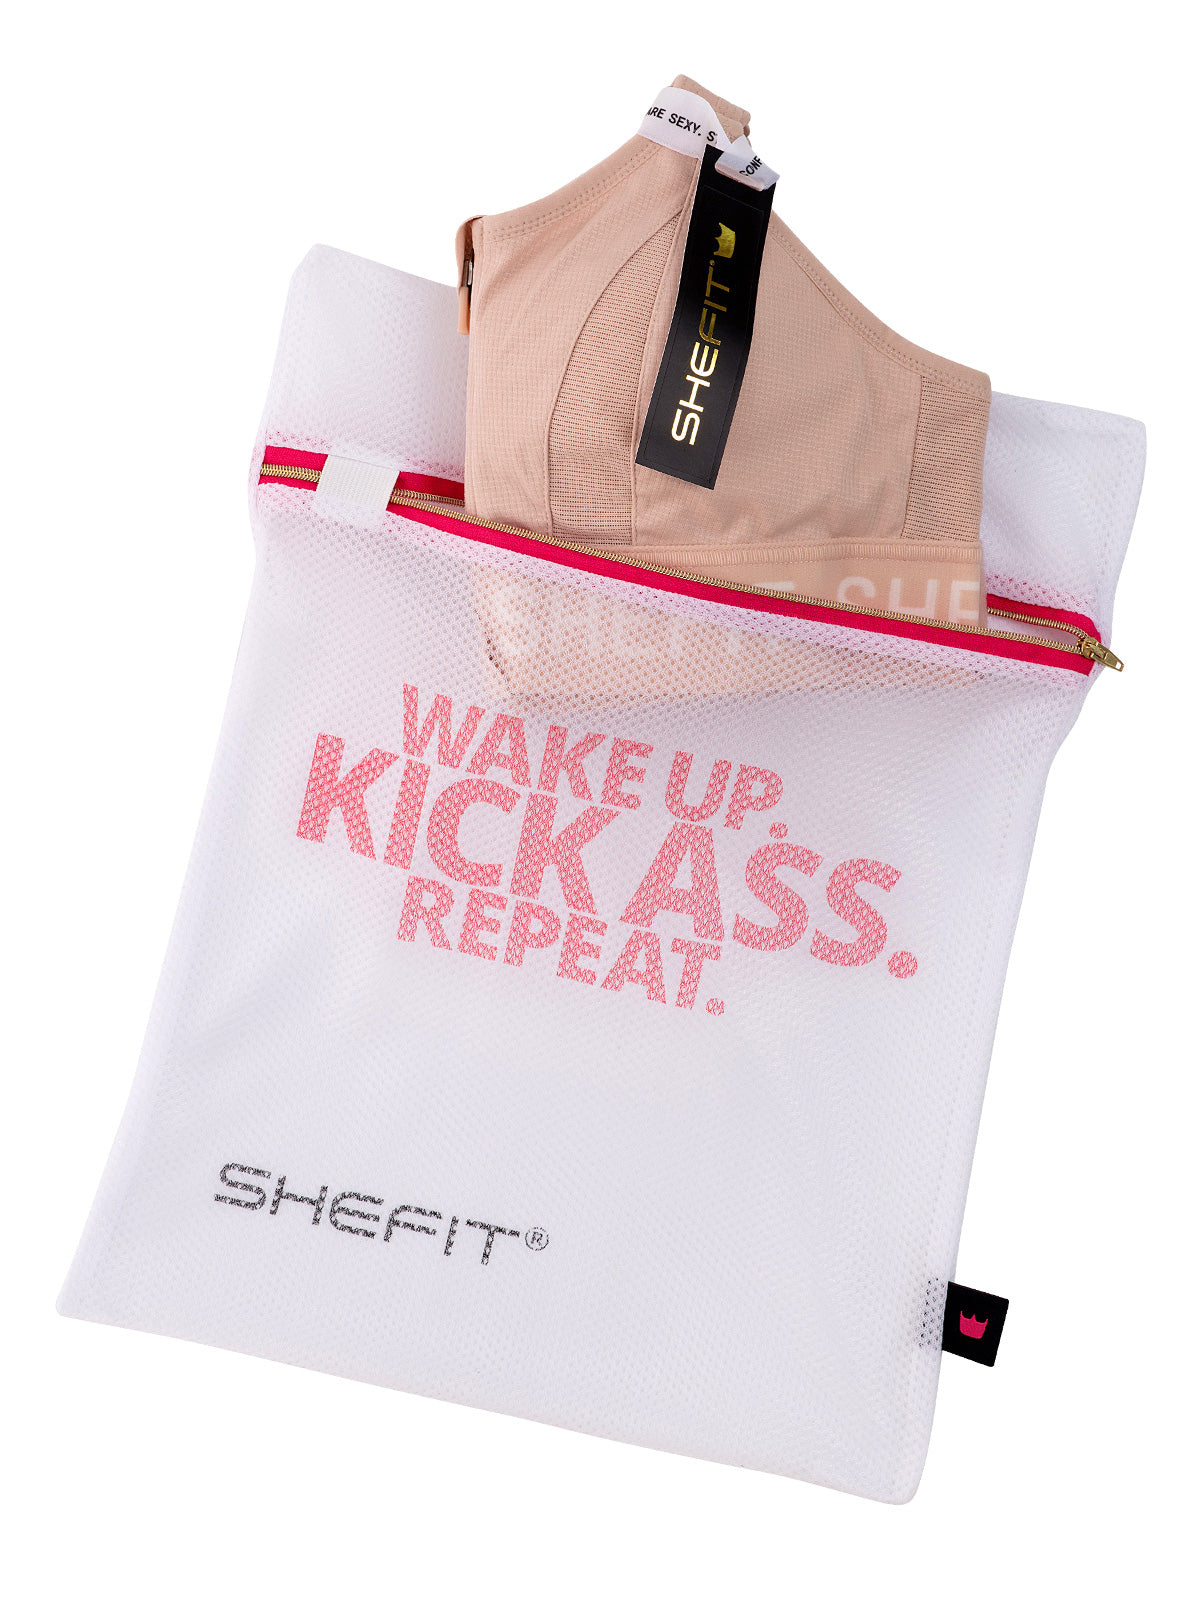 Shefit Lounge Sports Bra Size Small Seamless Zipper Front Wash Bag Peach